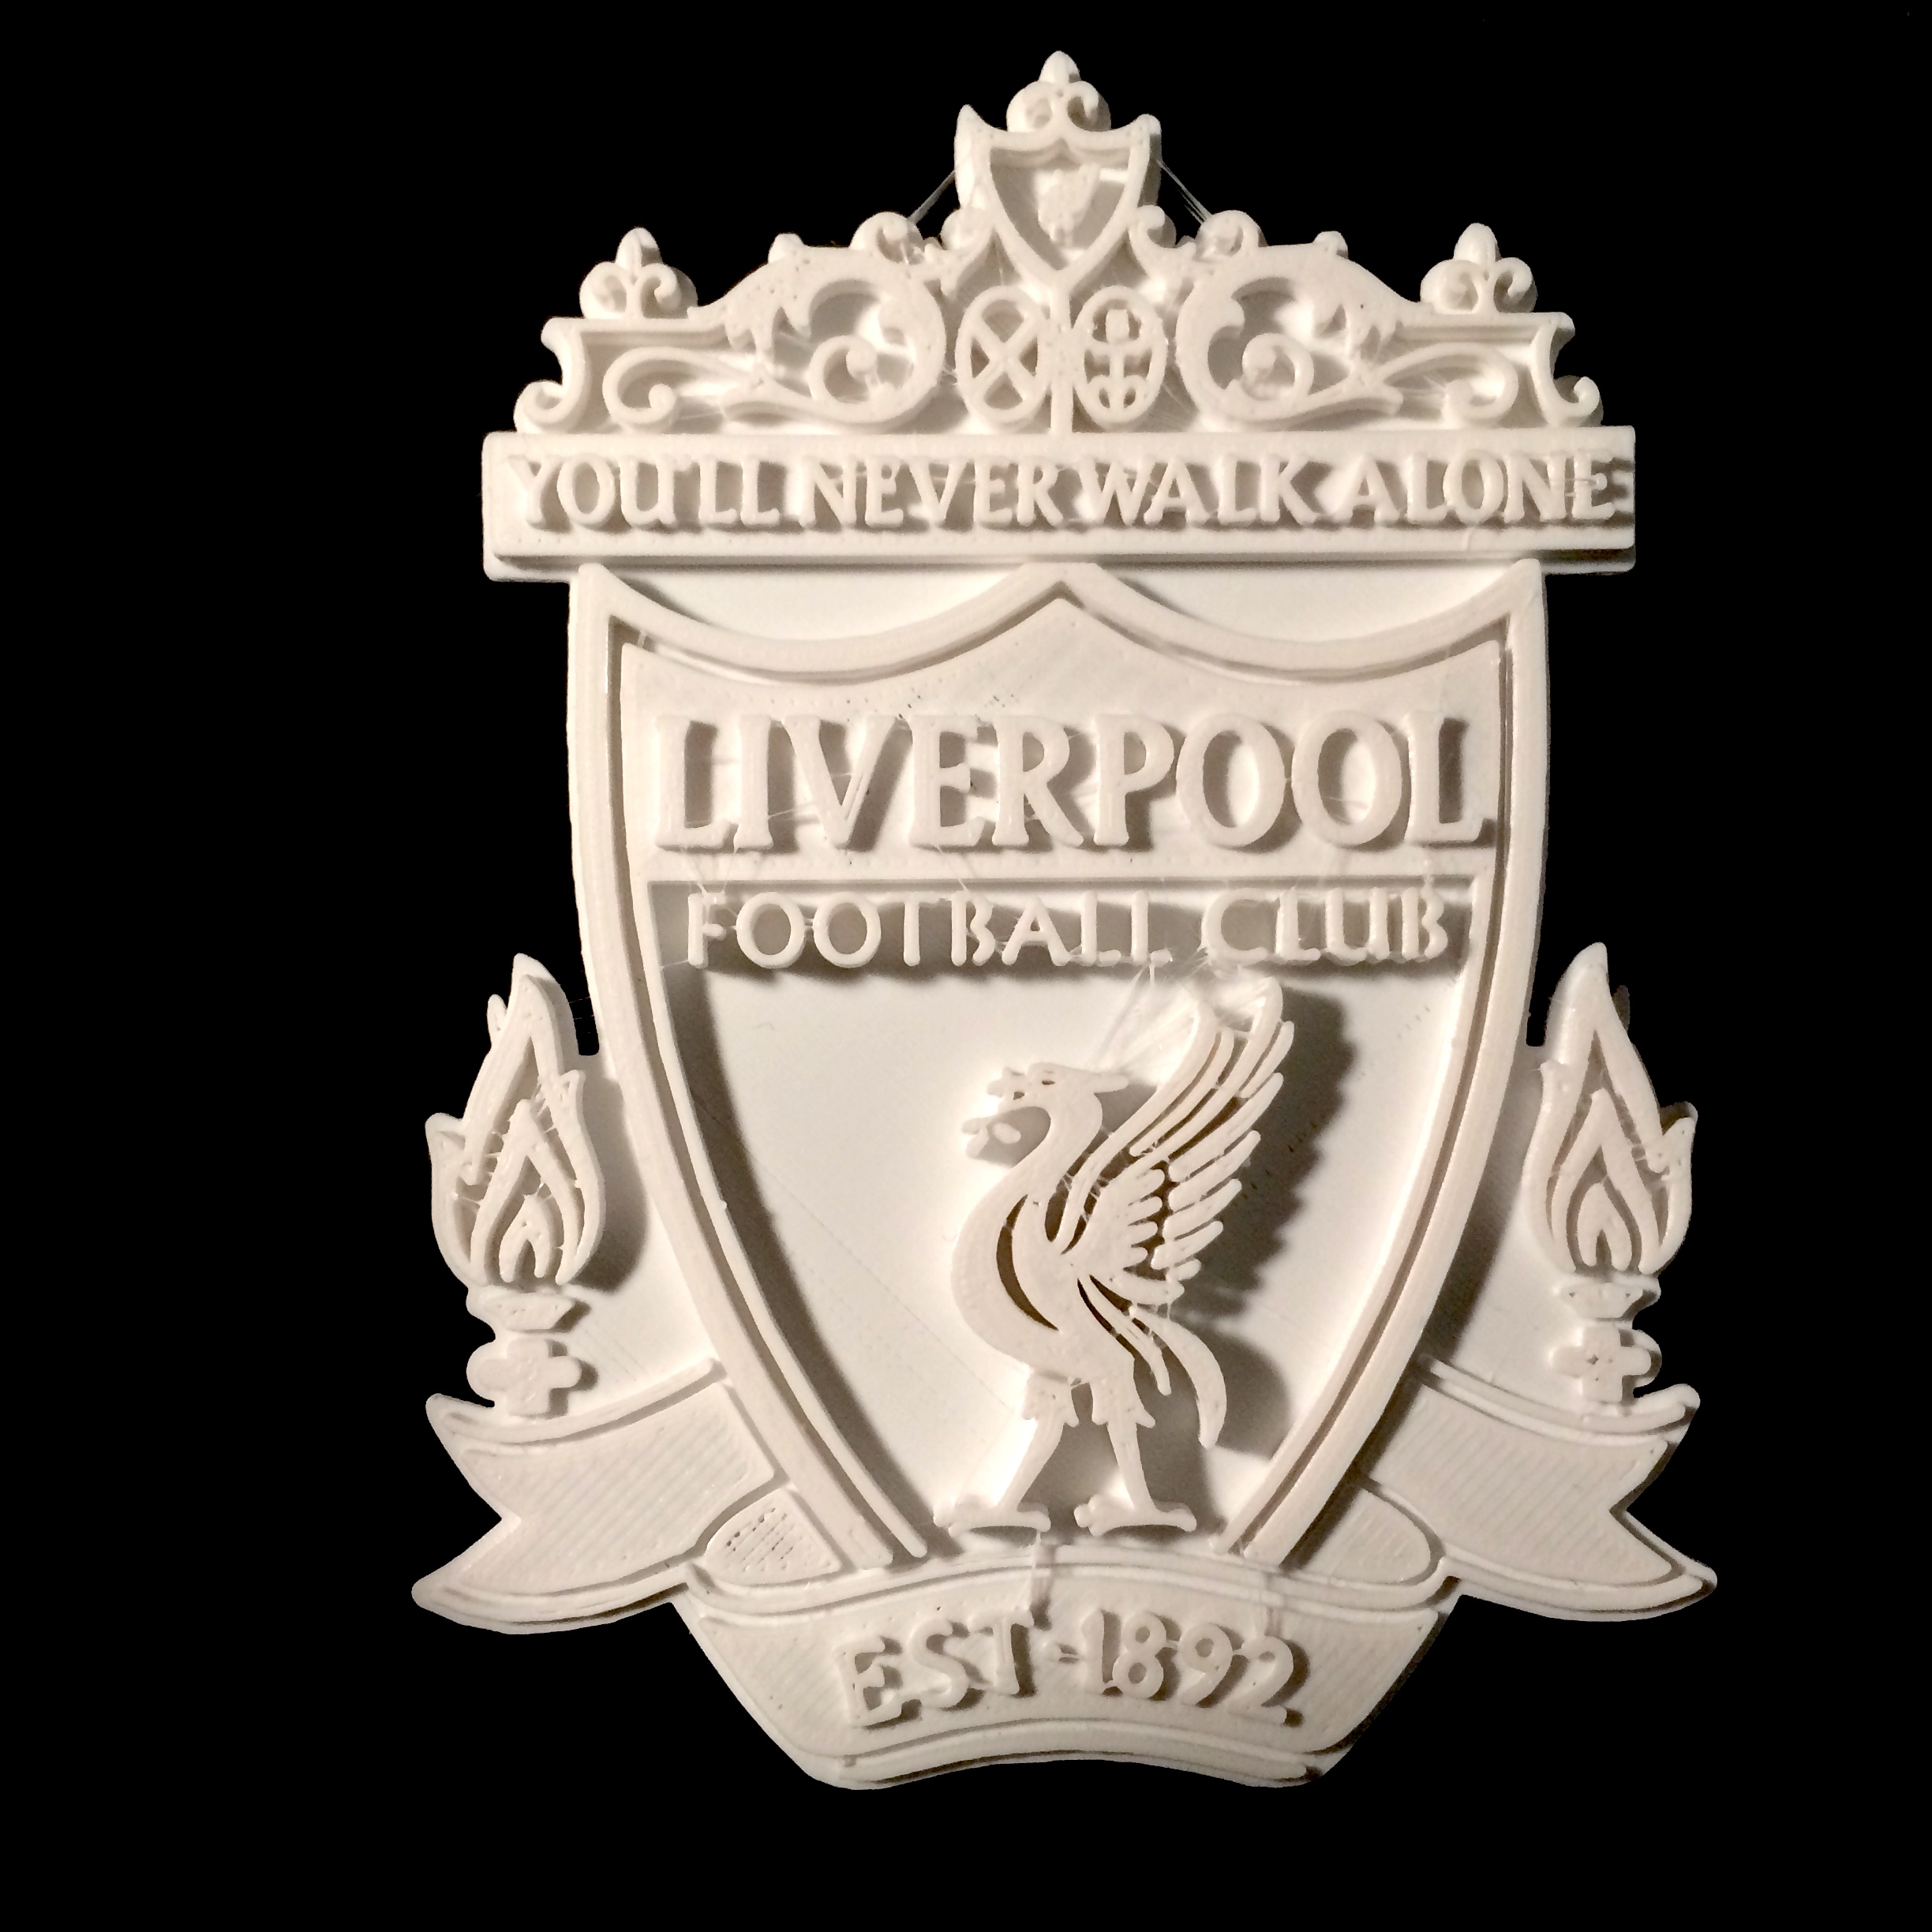 Liverpool FC - Logo